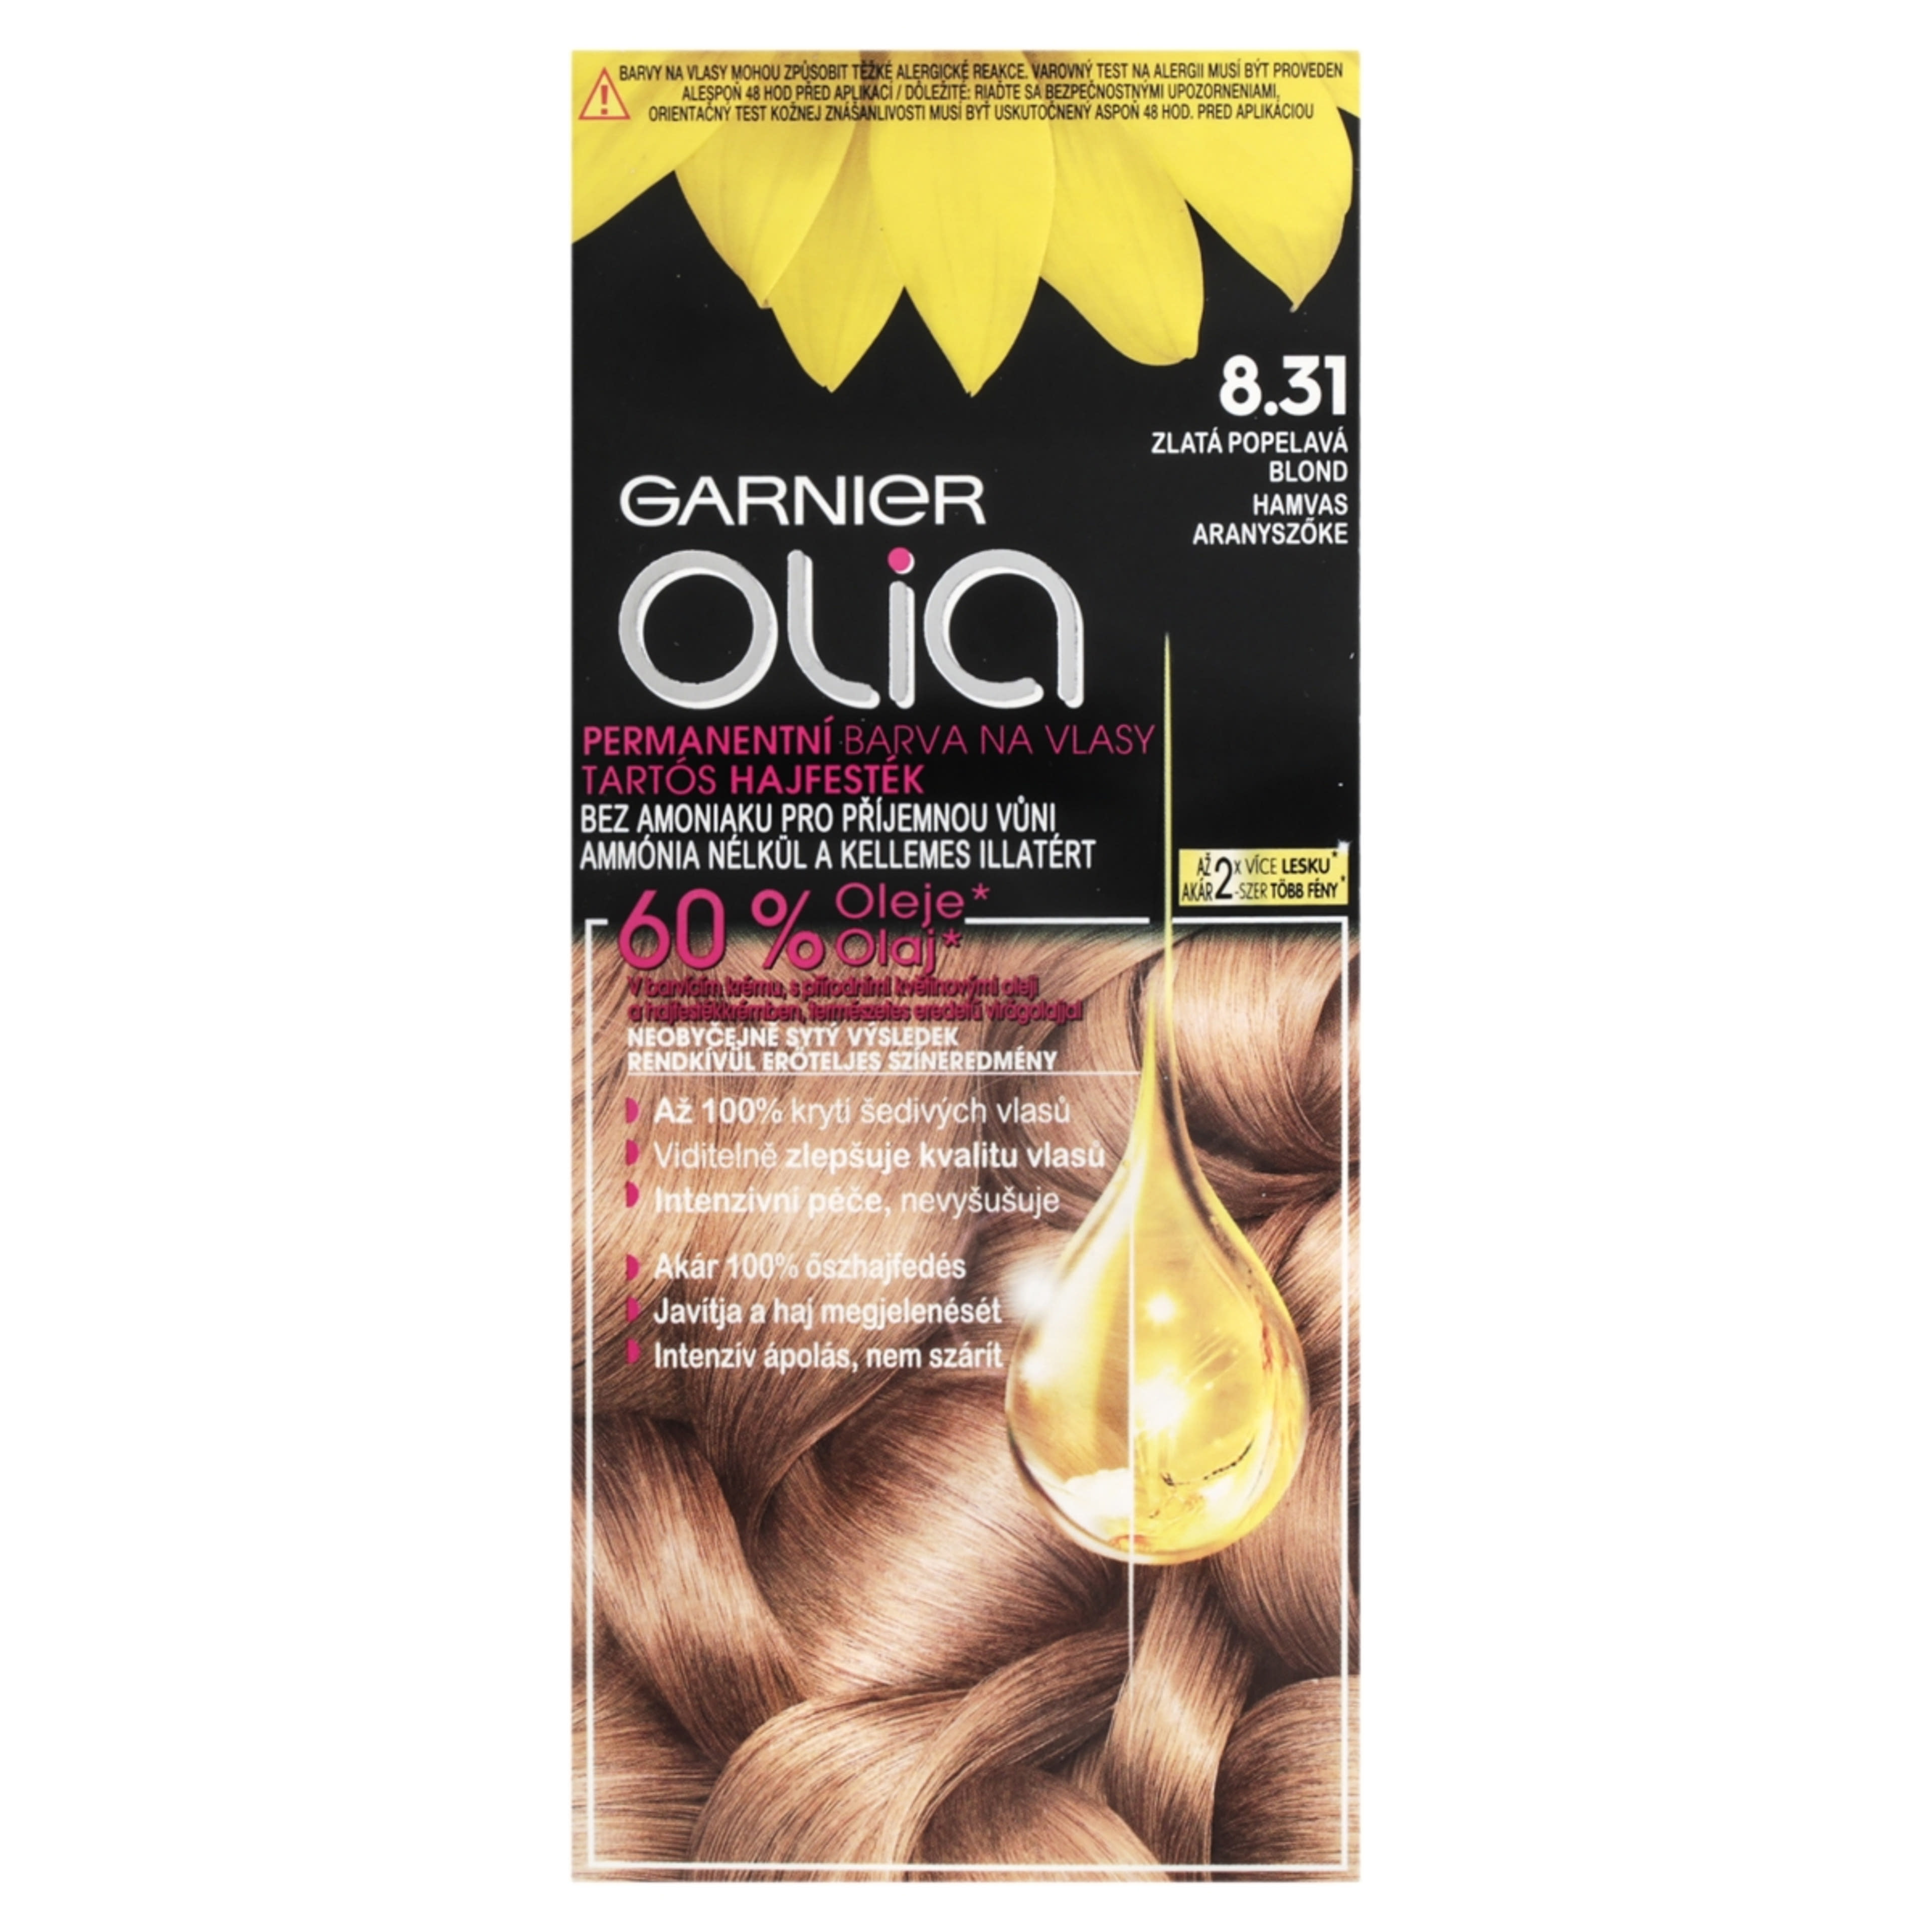 Garnier Olia tartós hajfesték 8.31 Hamvas aranyszőke - 1 db-1